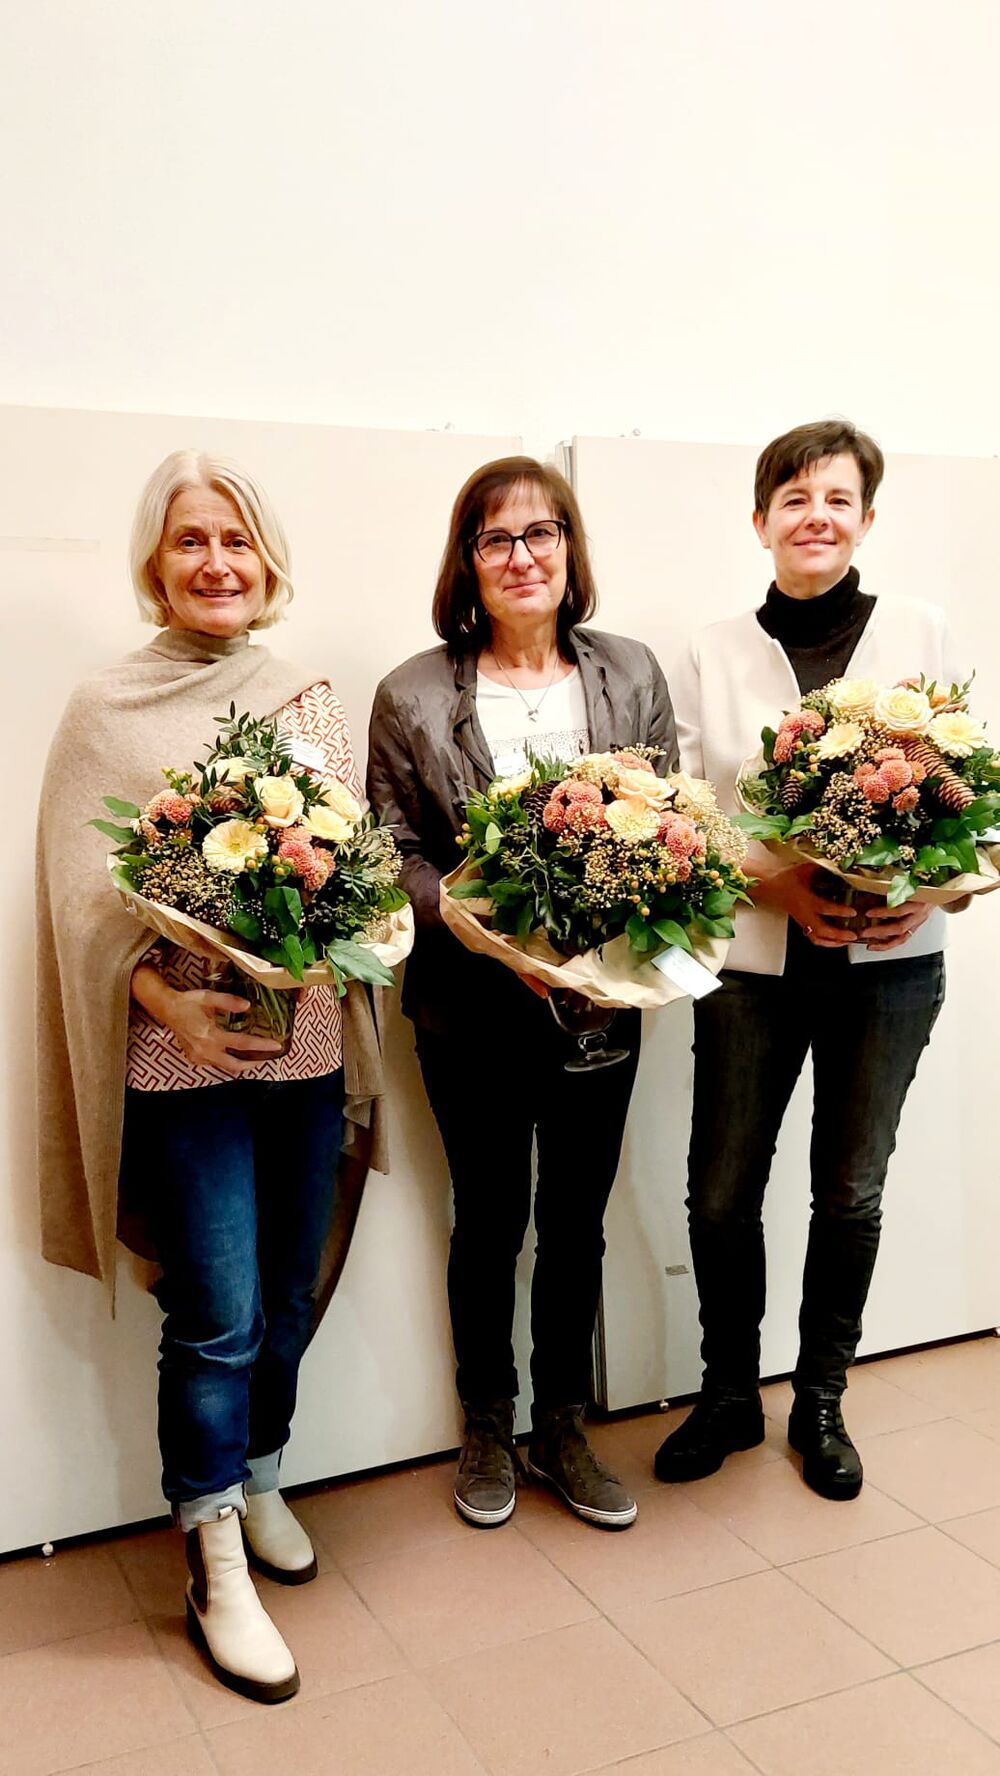 vlnr: Brigitta Minikus, Annamarie Zeberli, Isabelle Wepfer